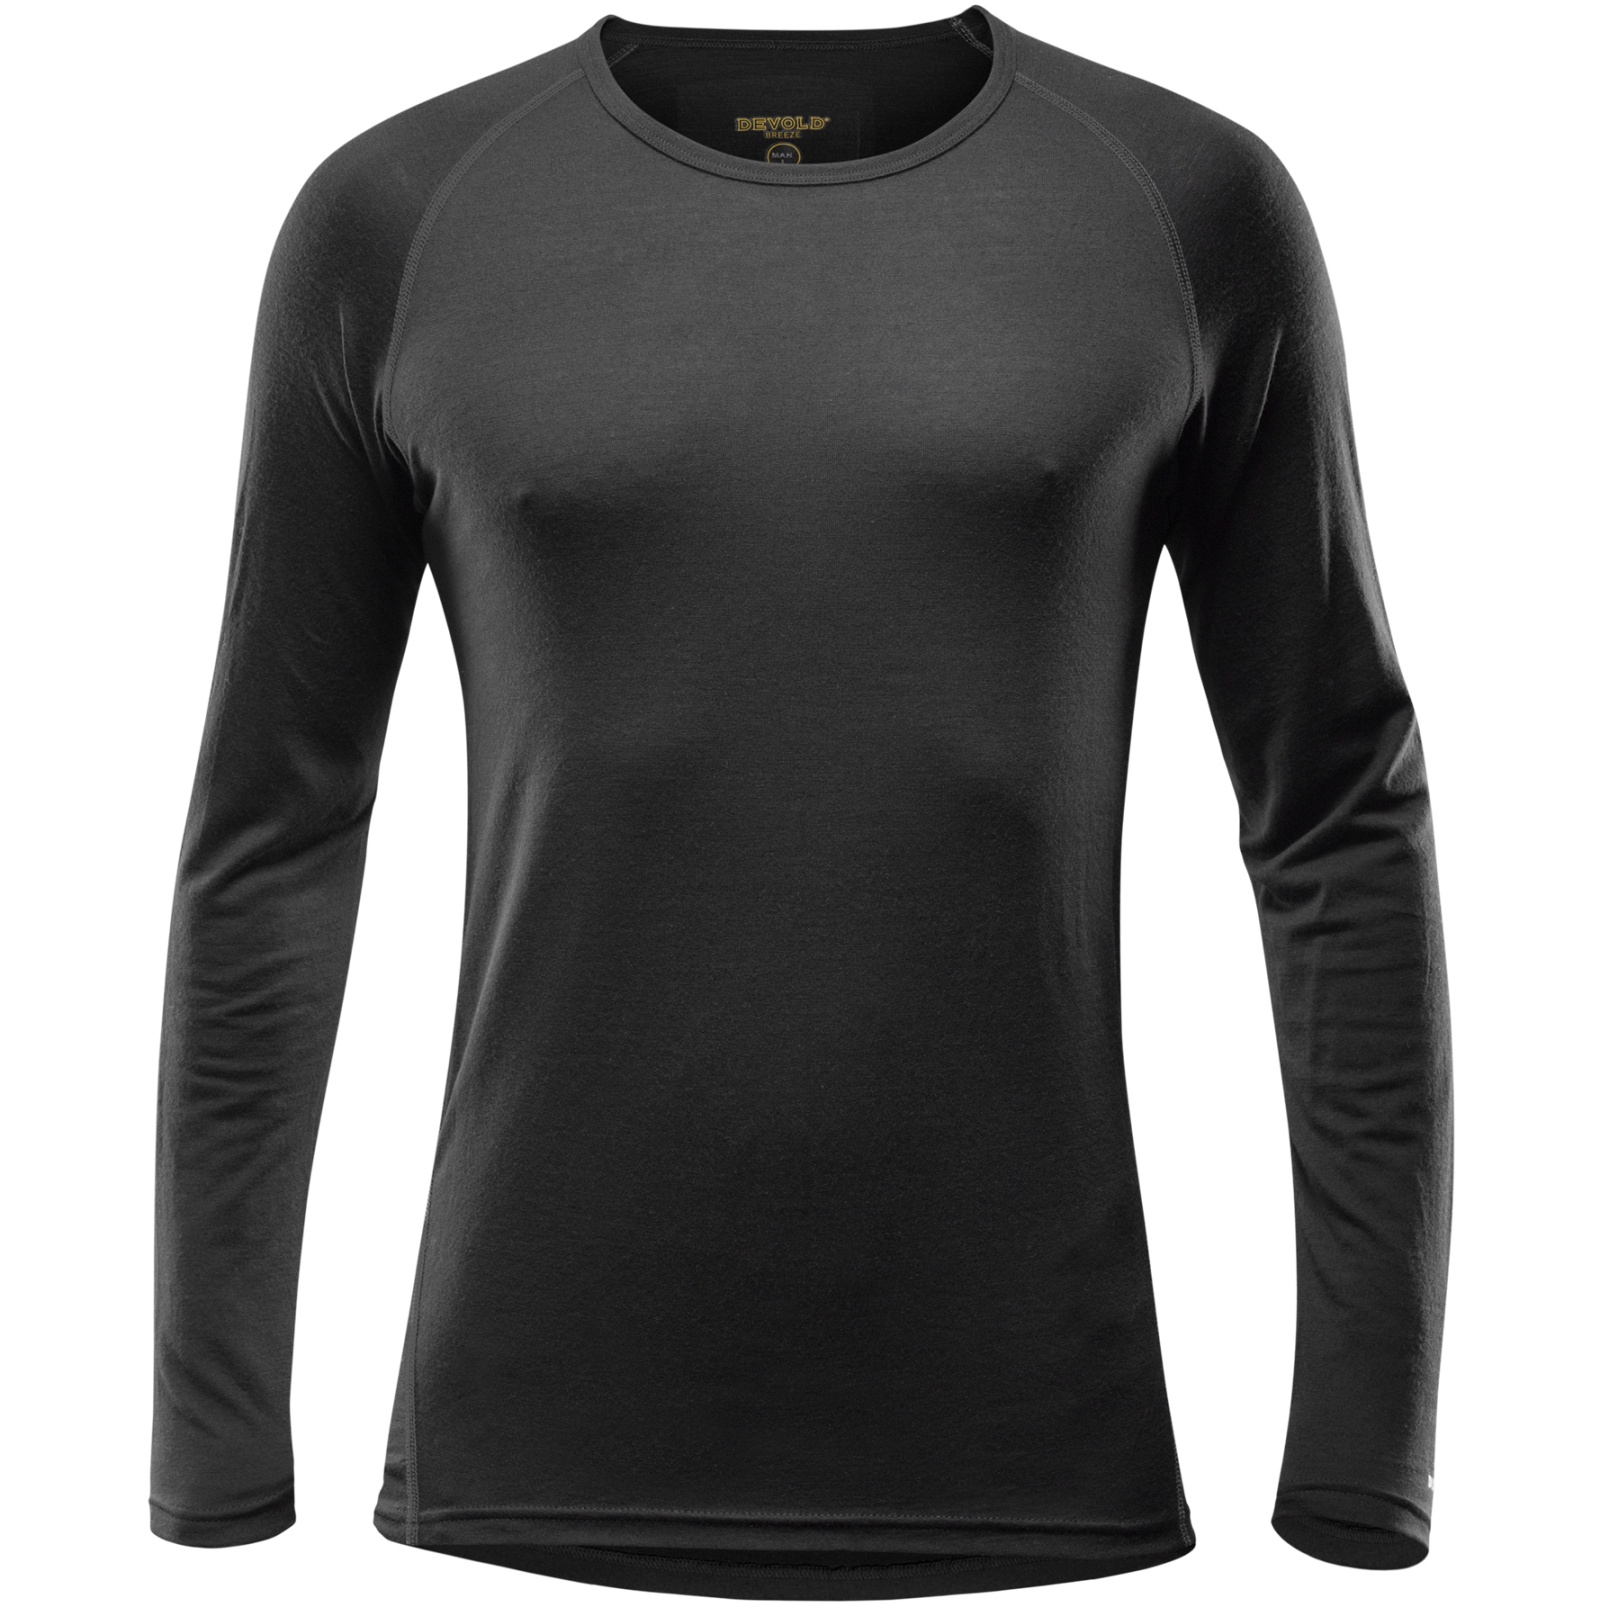 Image of Devold Breeze Merino 150 Shirt Men - 950A Black